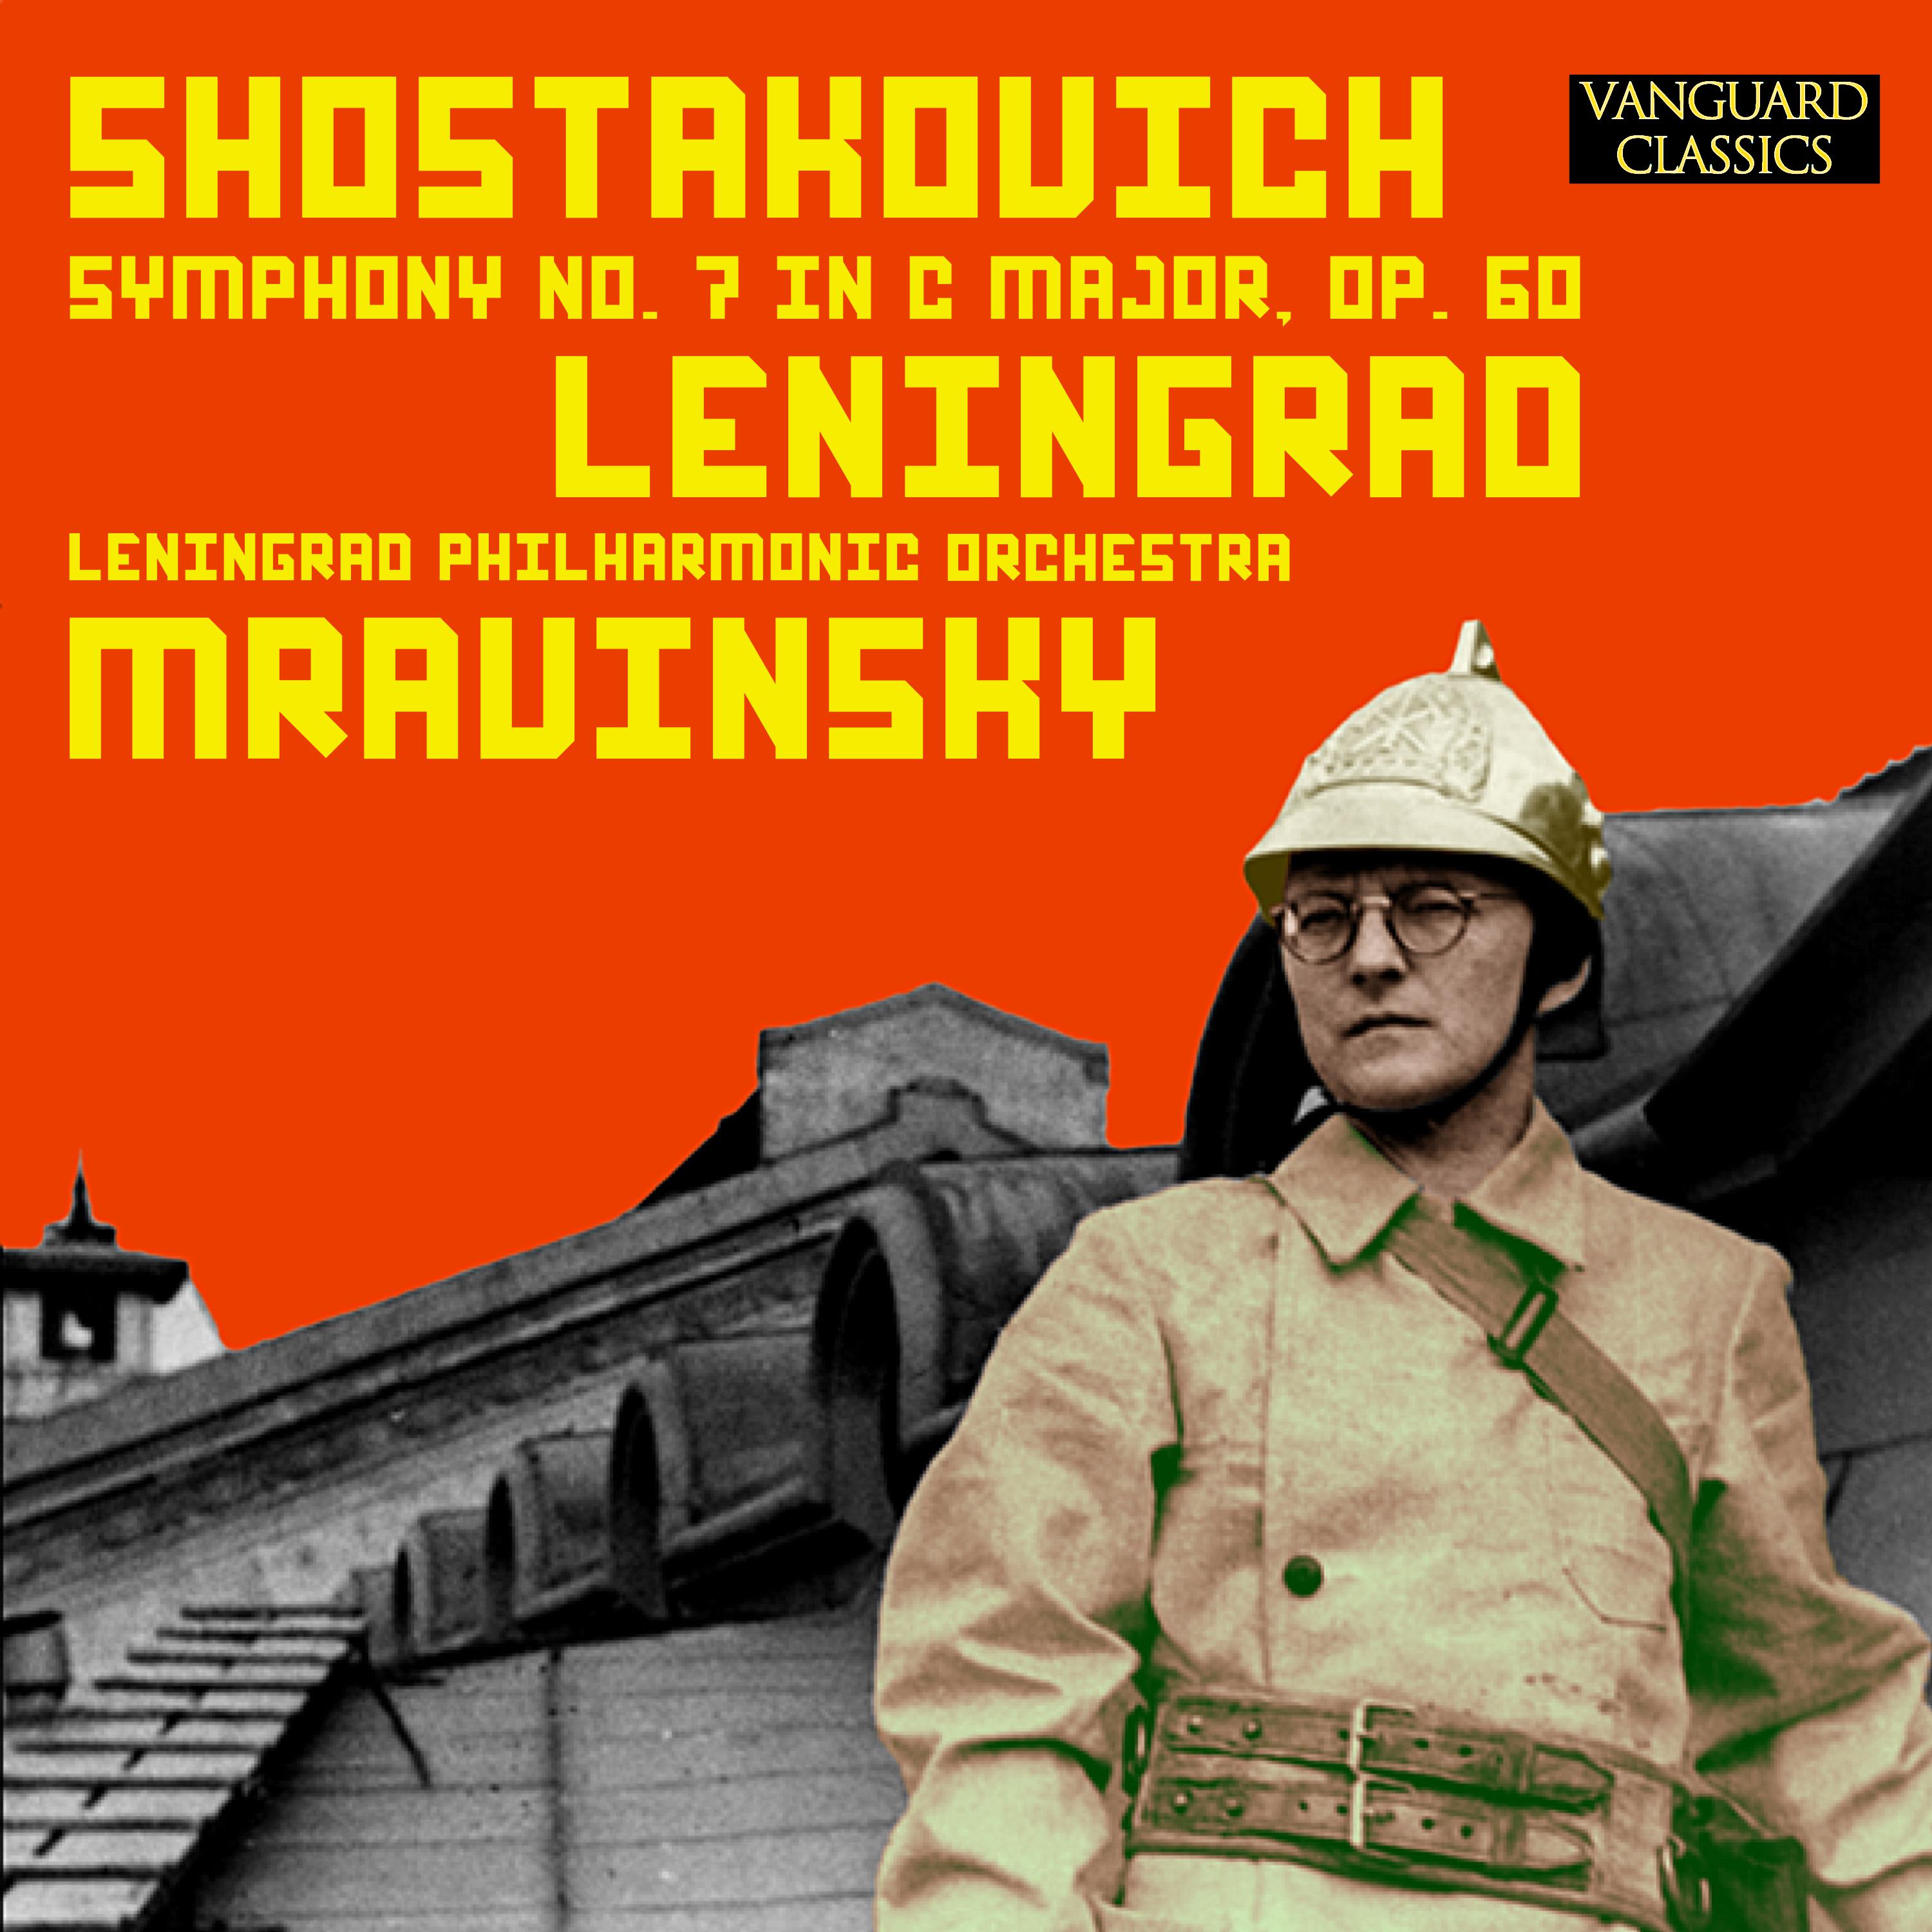 Shostakovich: Symphony No. 7 in C Major "Leningrad", Op. 60 –The Legendary 1953 Mravinsky Recording